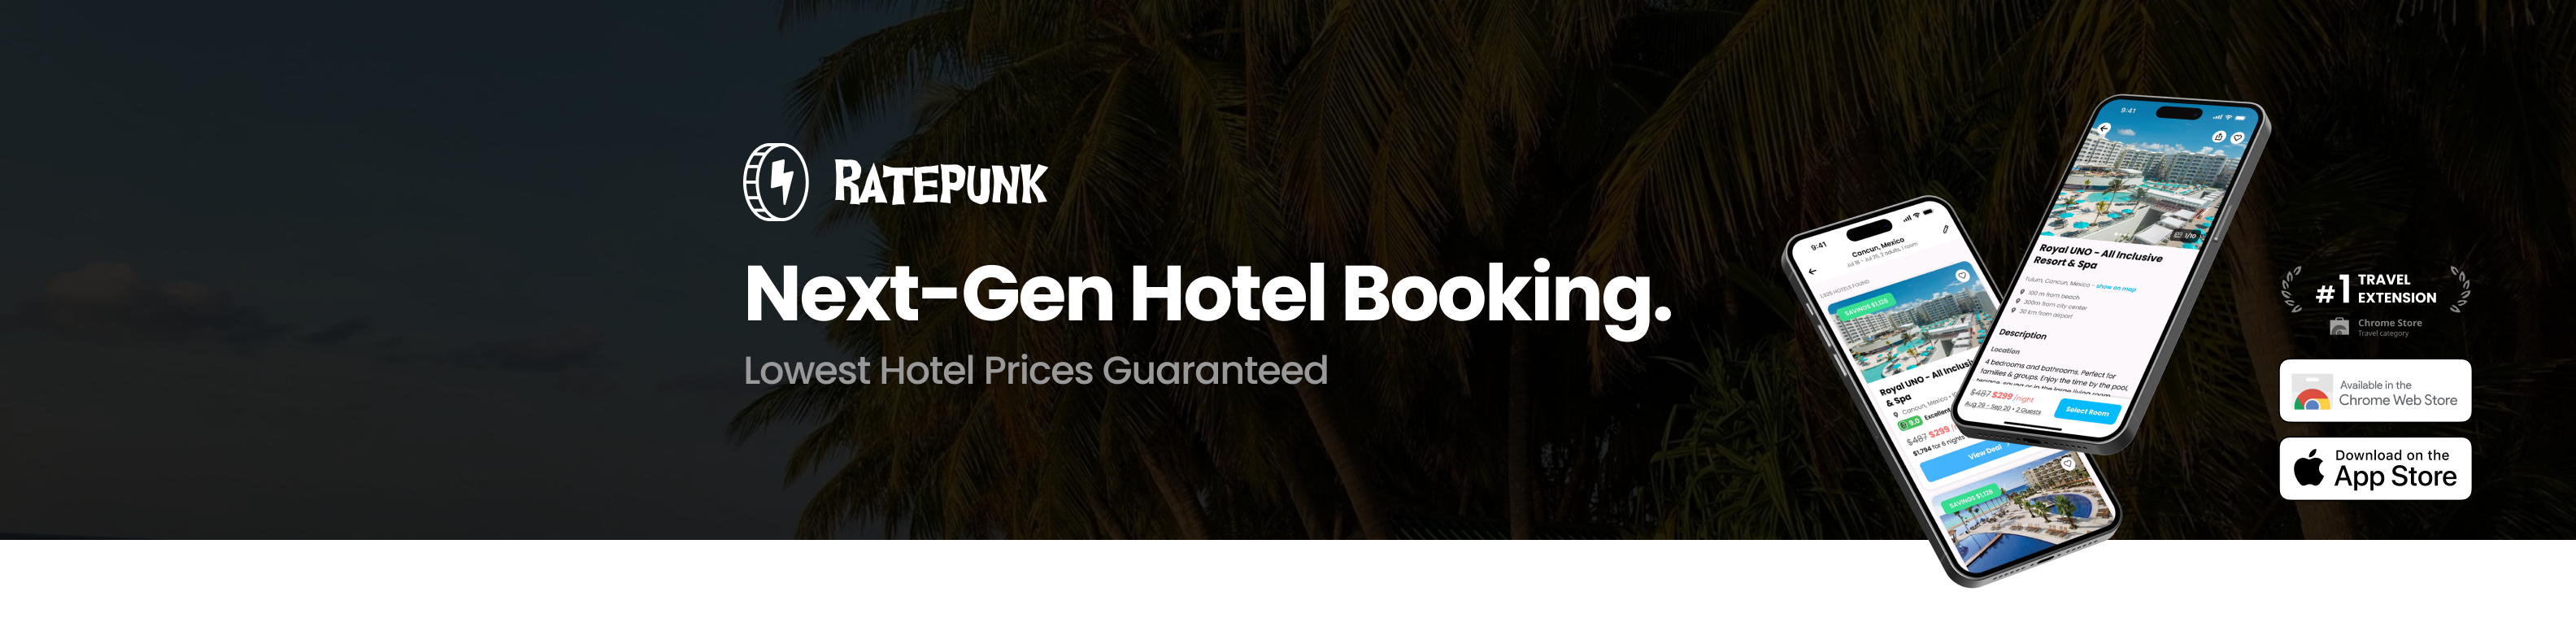 ratepunk hotel price comparison tool - best price guaranteed